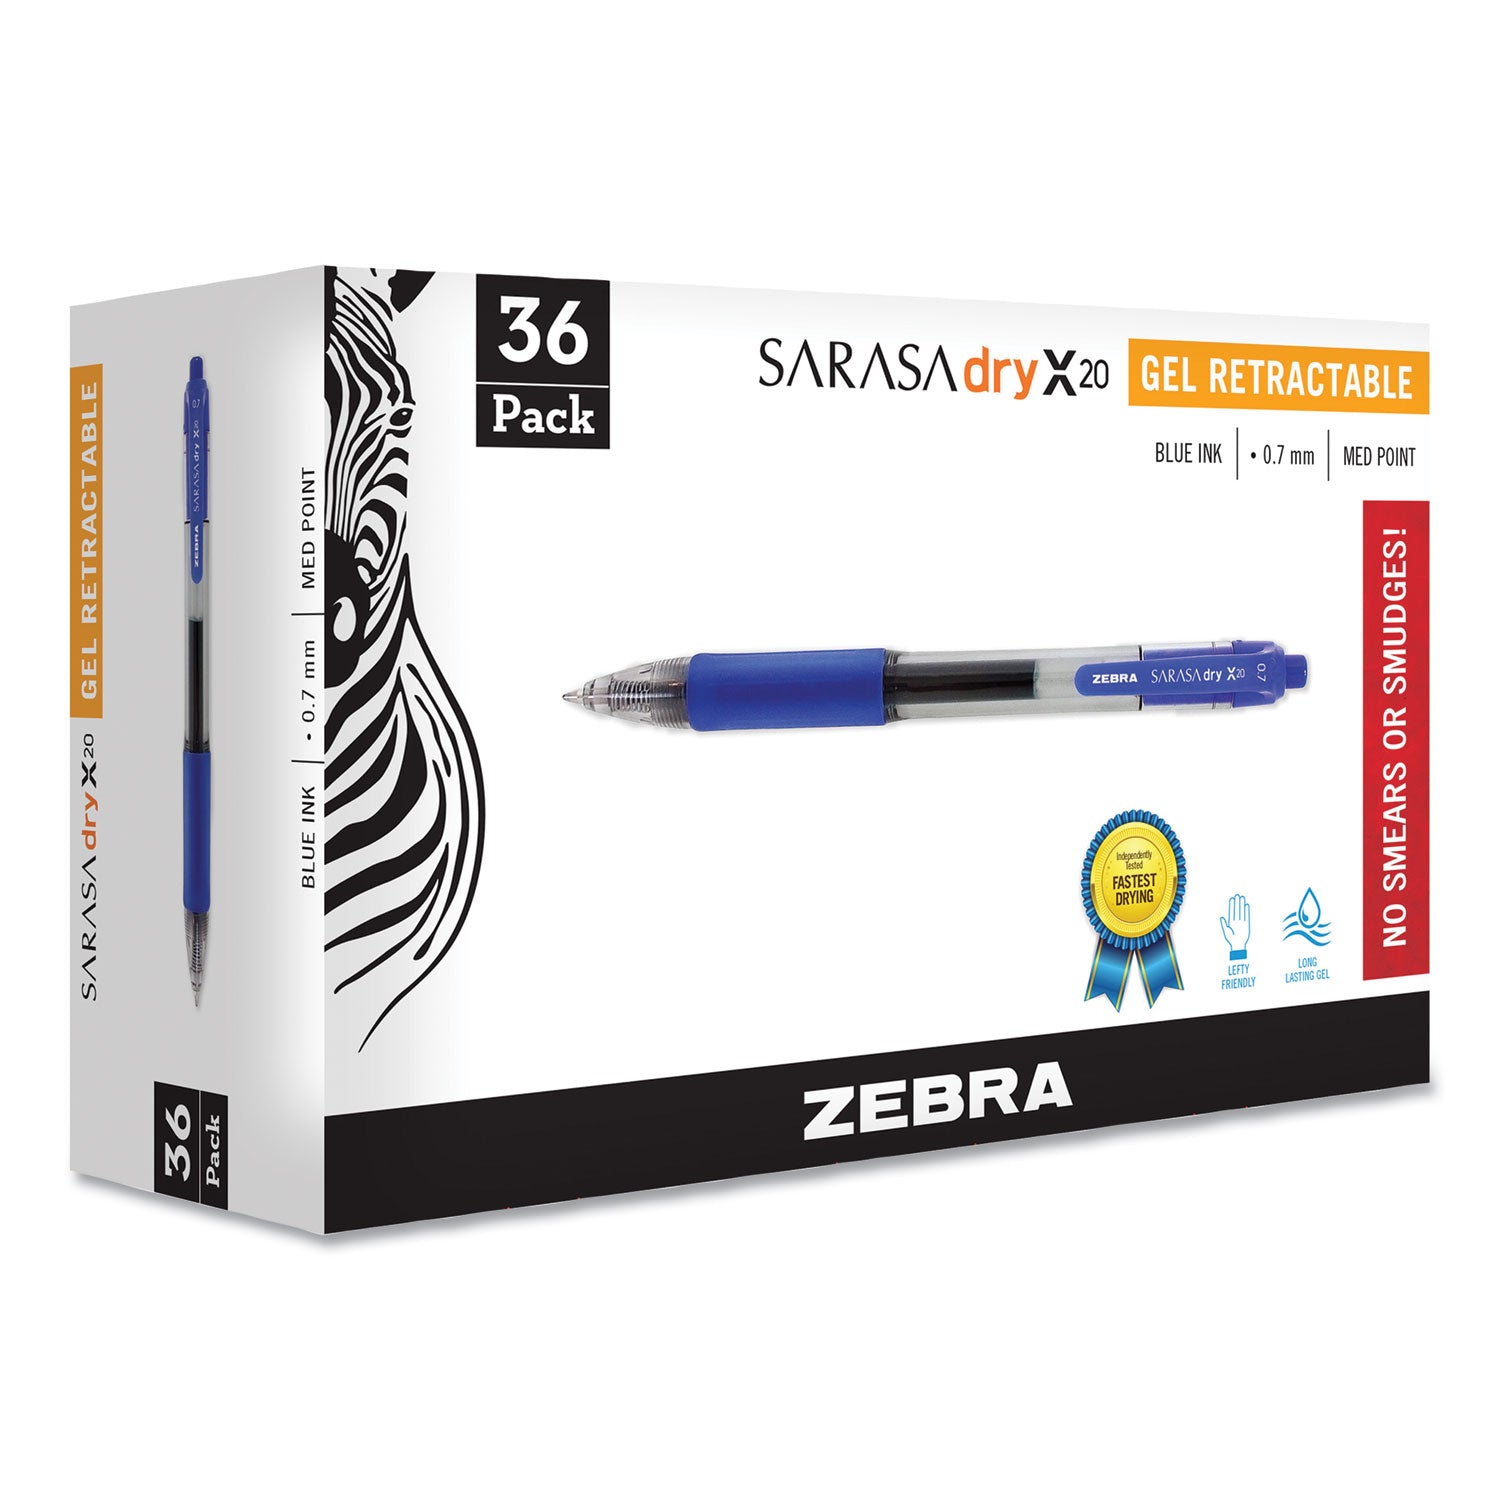 sarasa-dry-gel-x20-gel-pen-retractable-medium-07-mm-blue-ink-clear-blue-barrel-36-pack_zeb46236 - 2